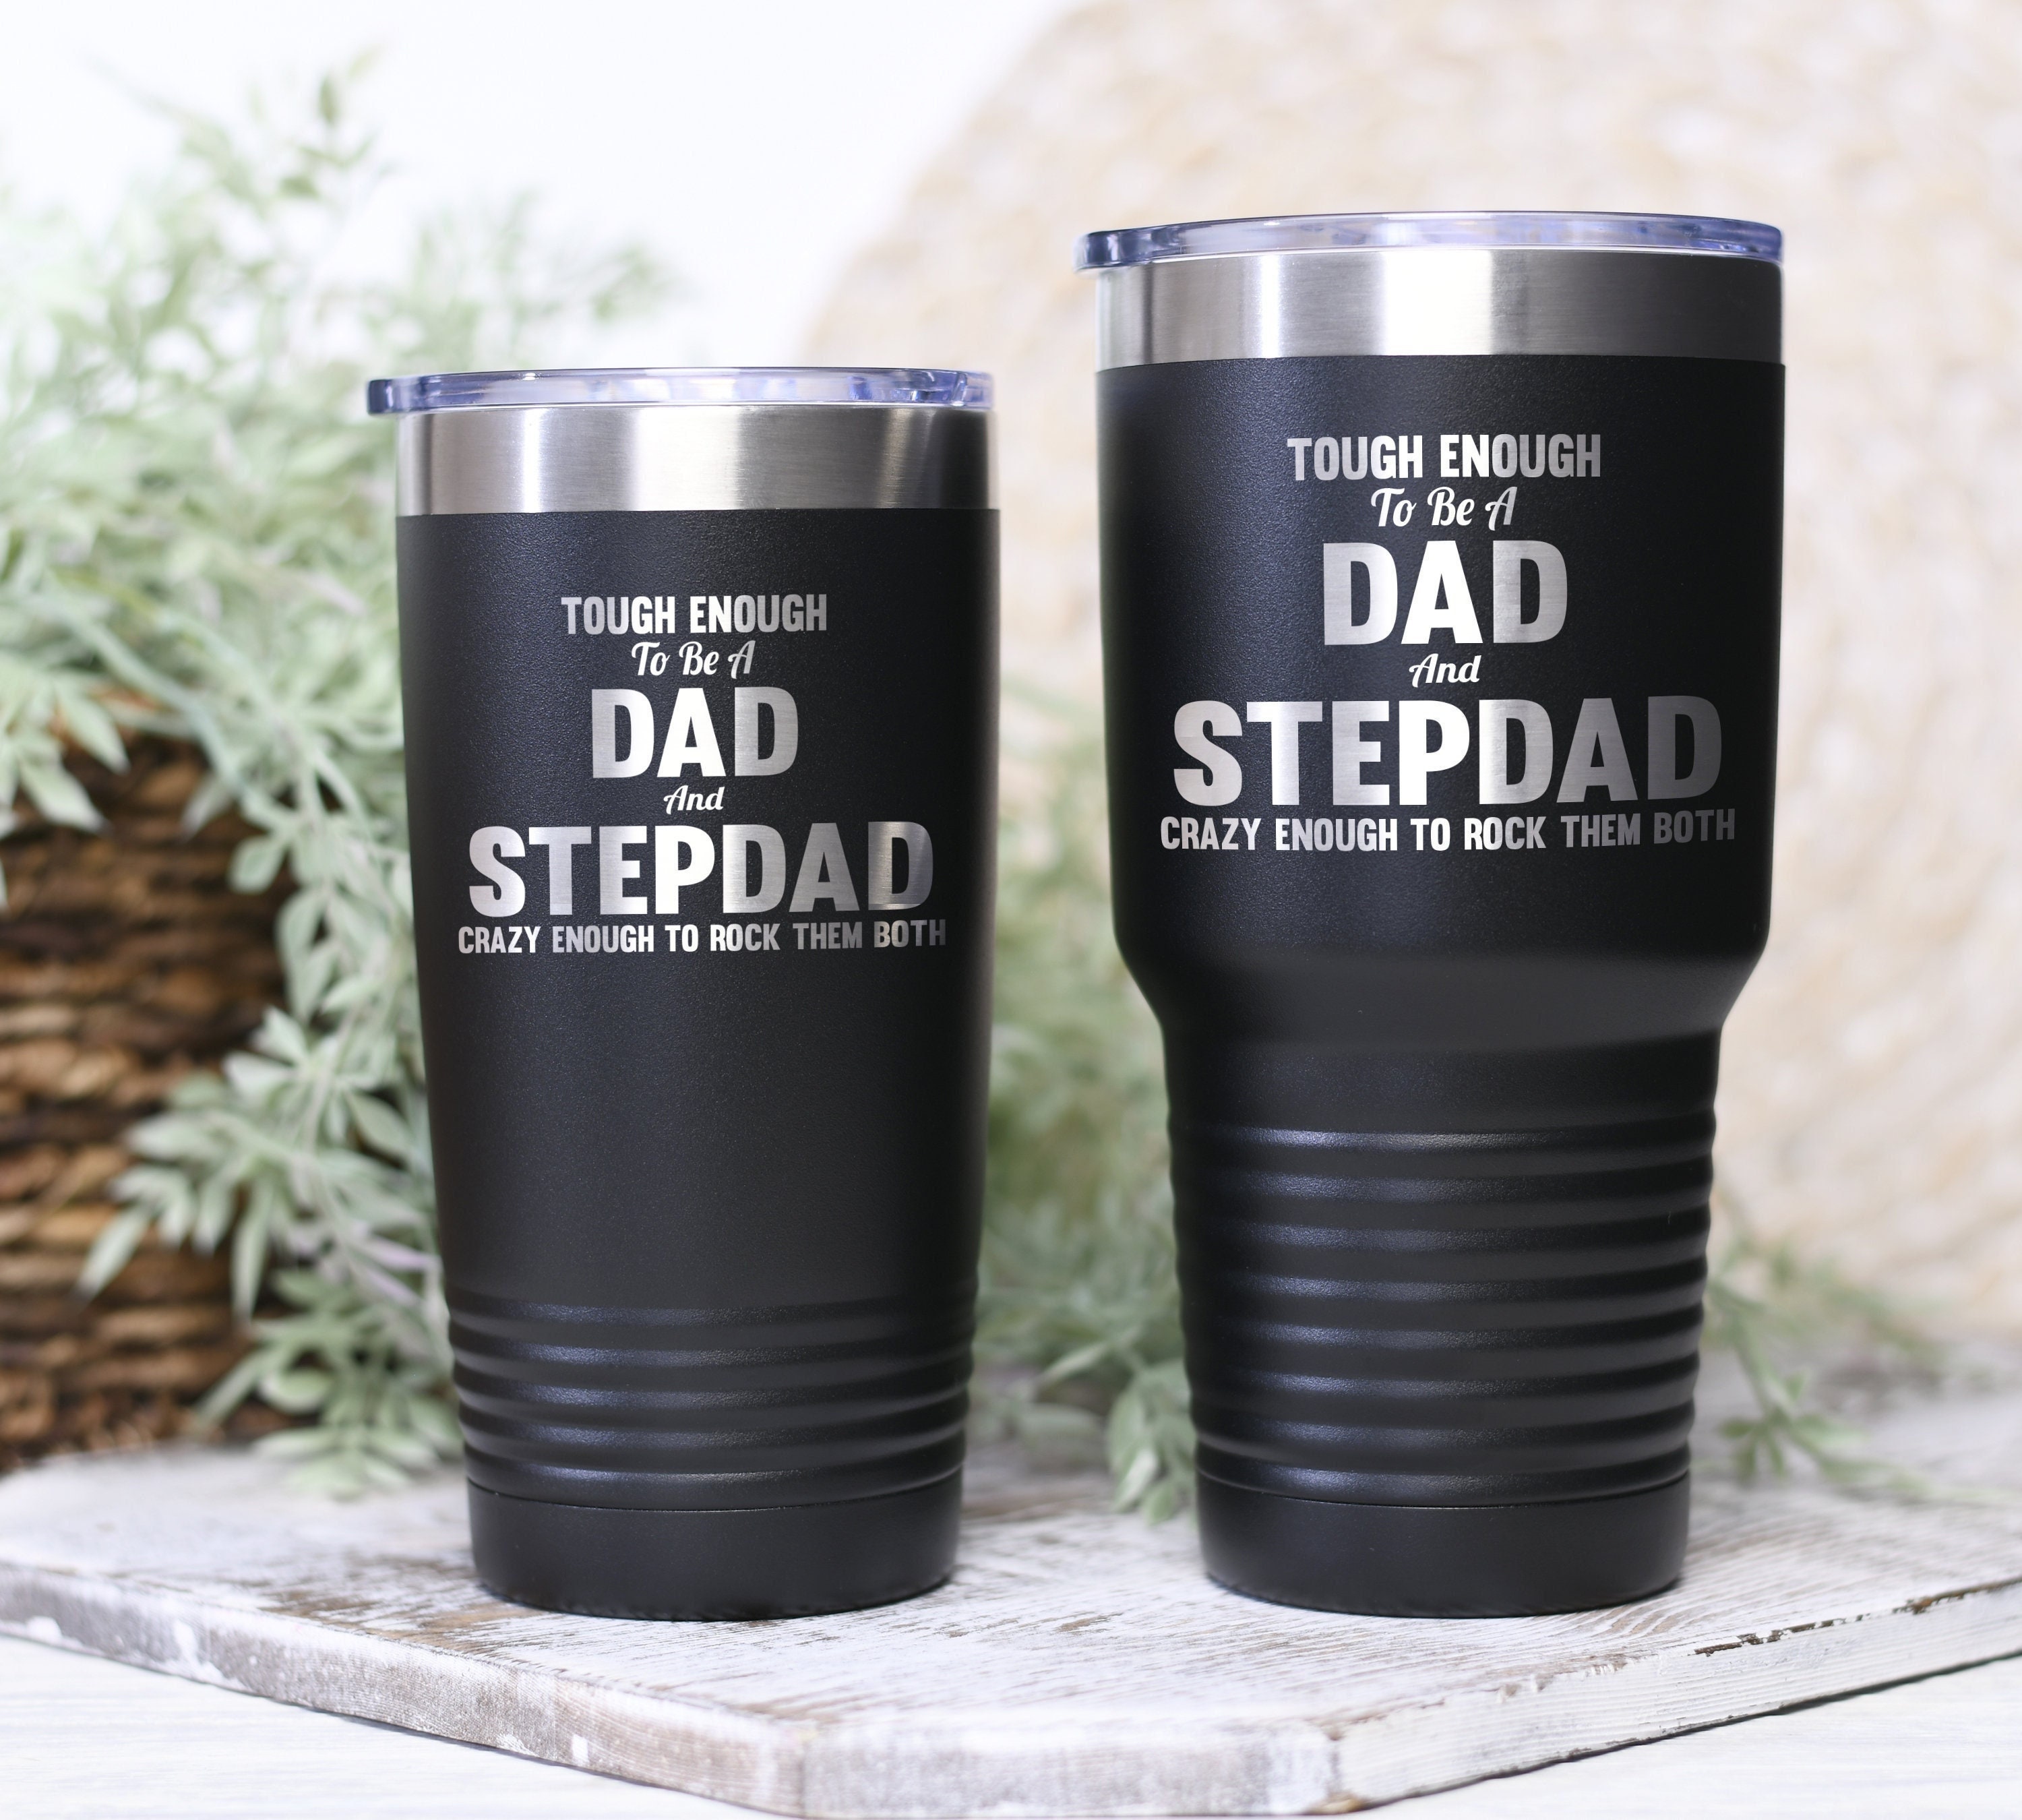 Bonus Dad Stepdad Custom Engraved YETI Tumbler - Great Personalized Gift! –  Sunny Box